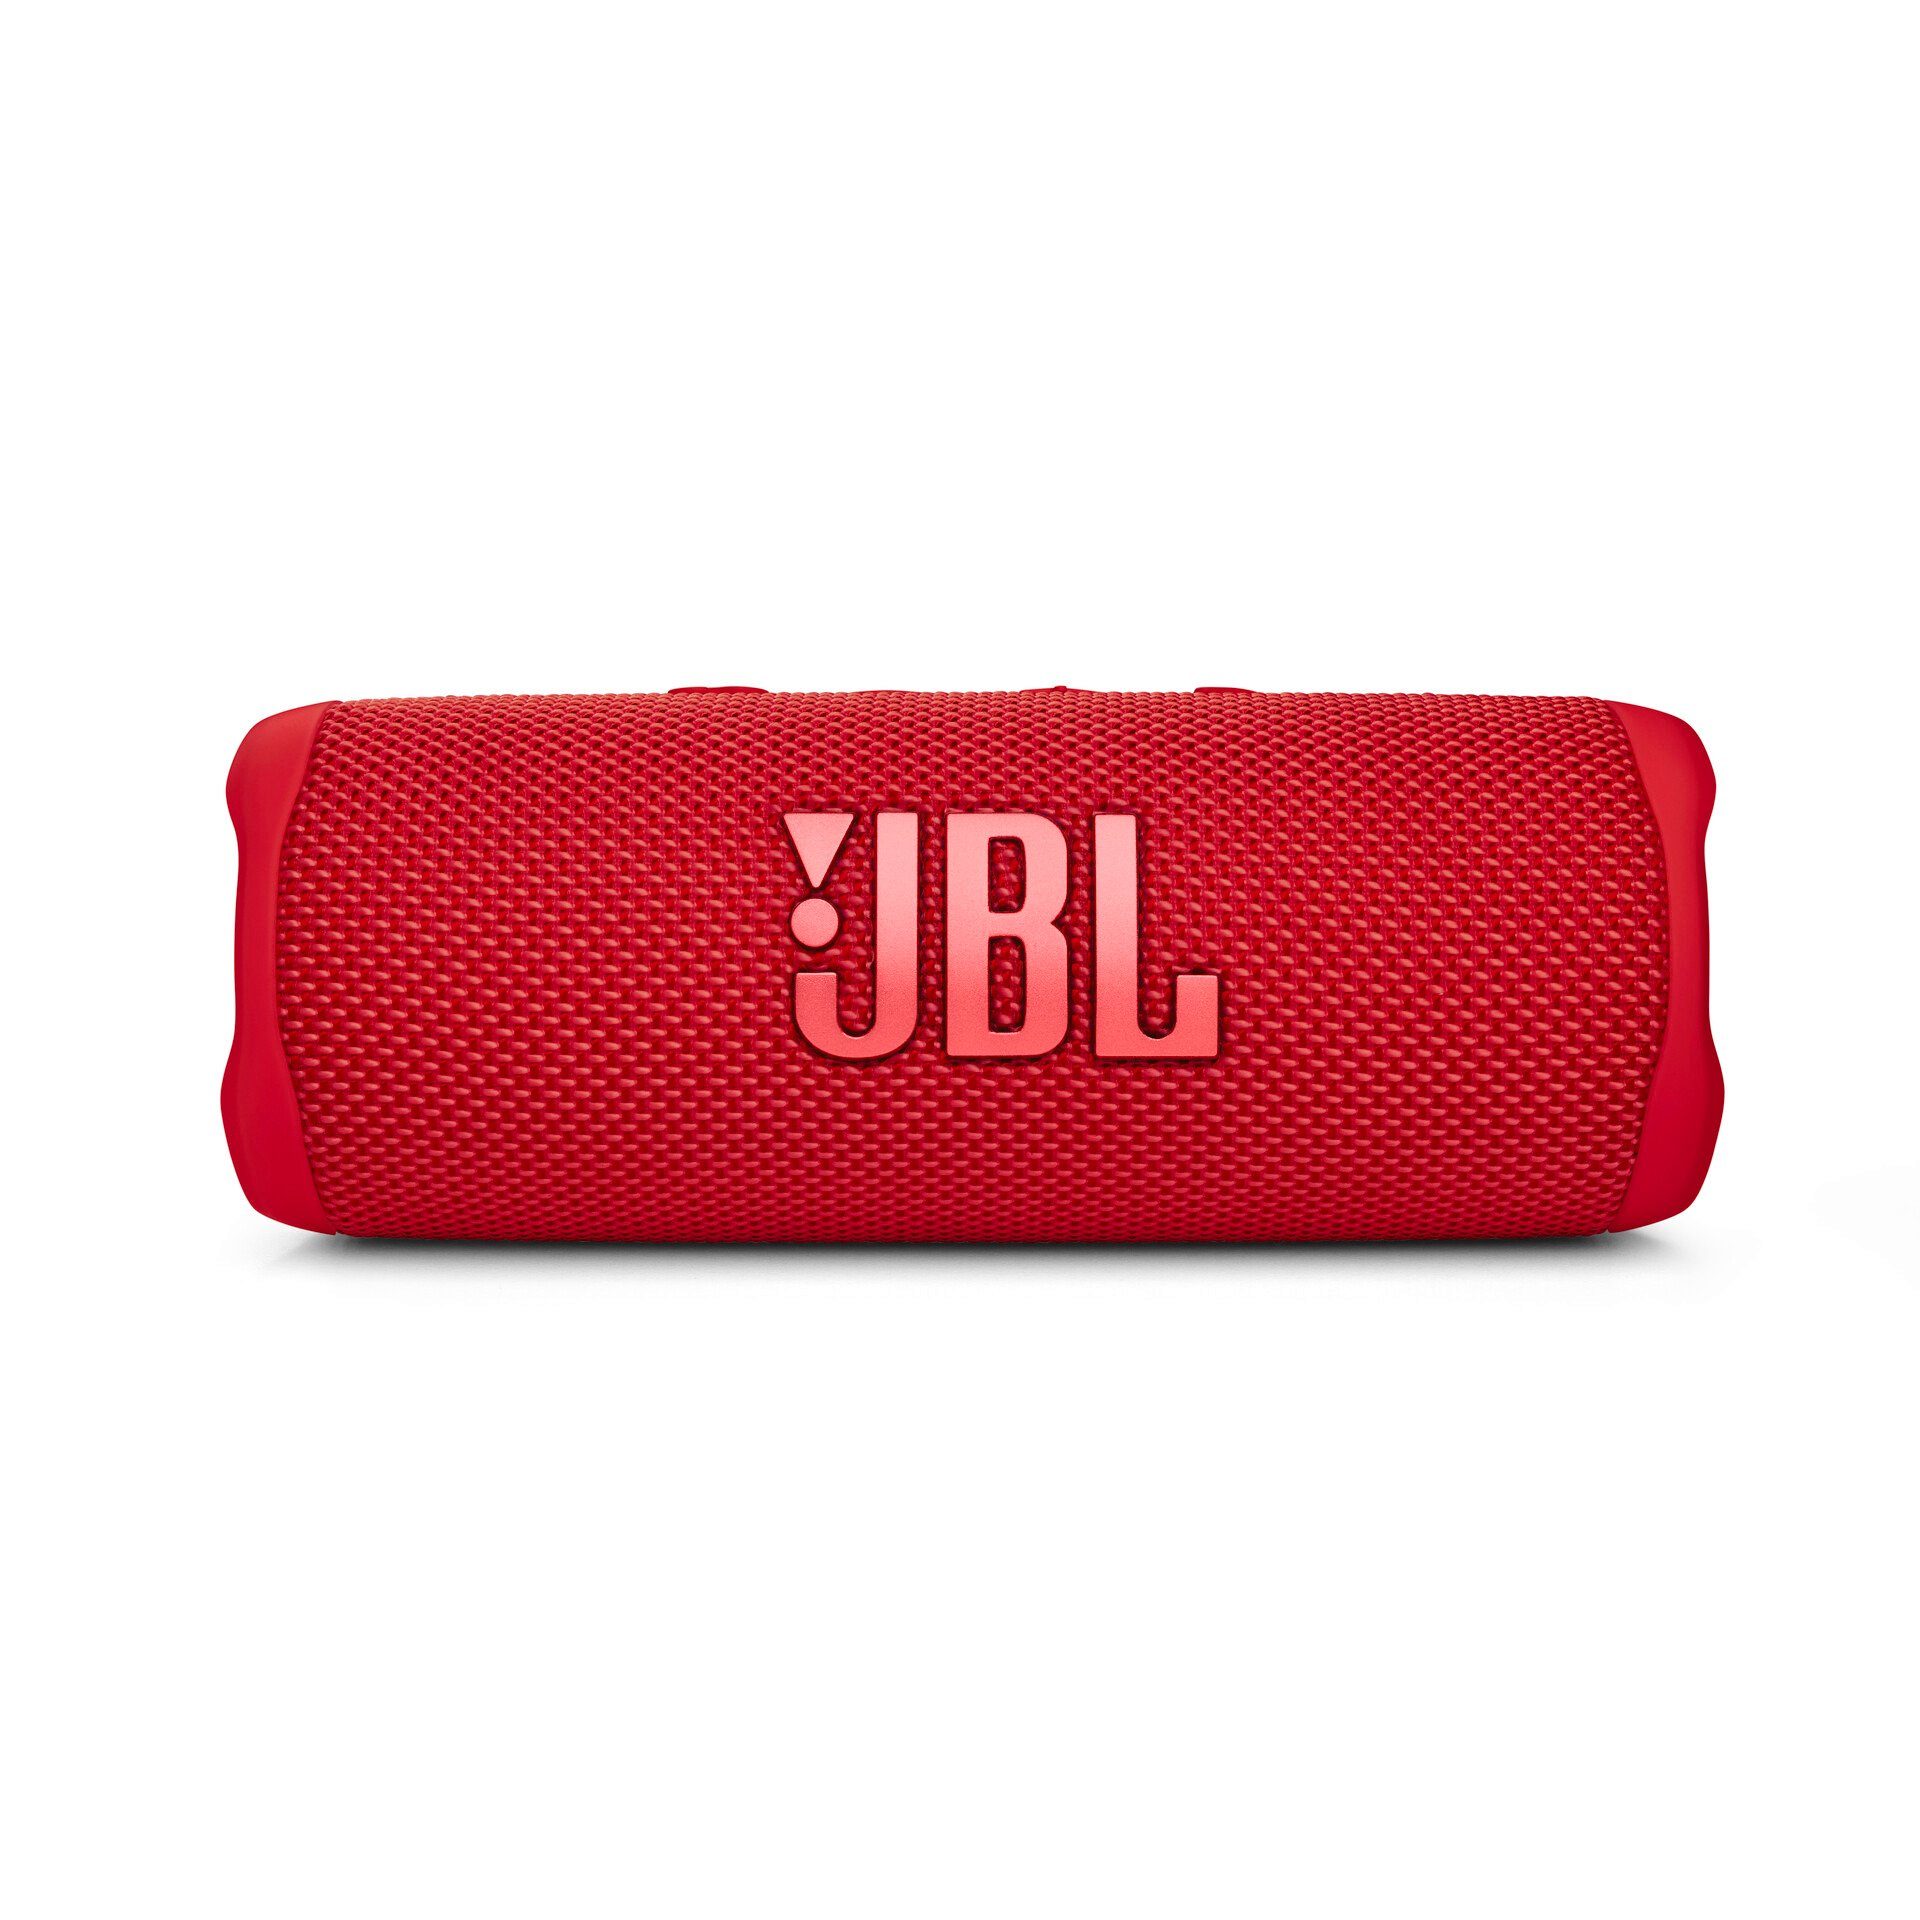 Super günstig & neu! JBL FLIP (Bluetooth, rot W) 30 Lautsprecher 6